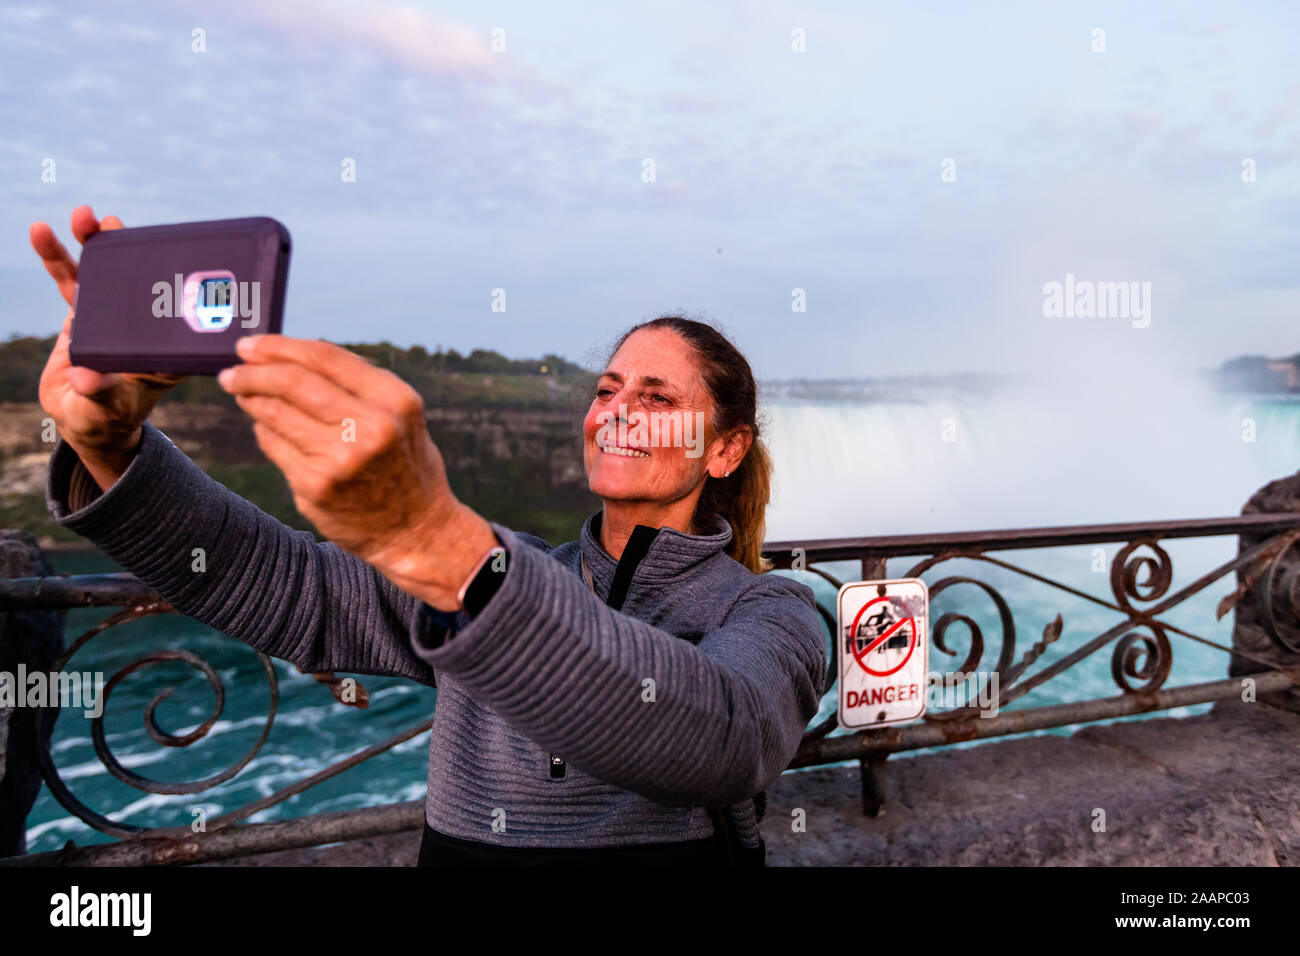 Tourist takes selfie while on vacation, at Niagara Falls Stock Photo